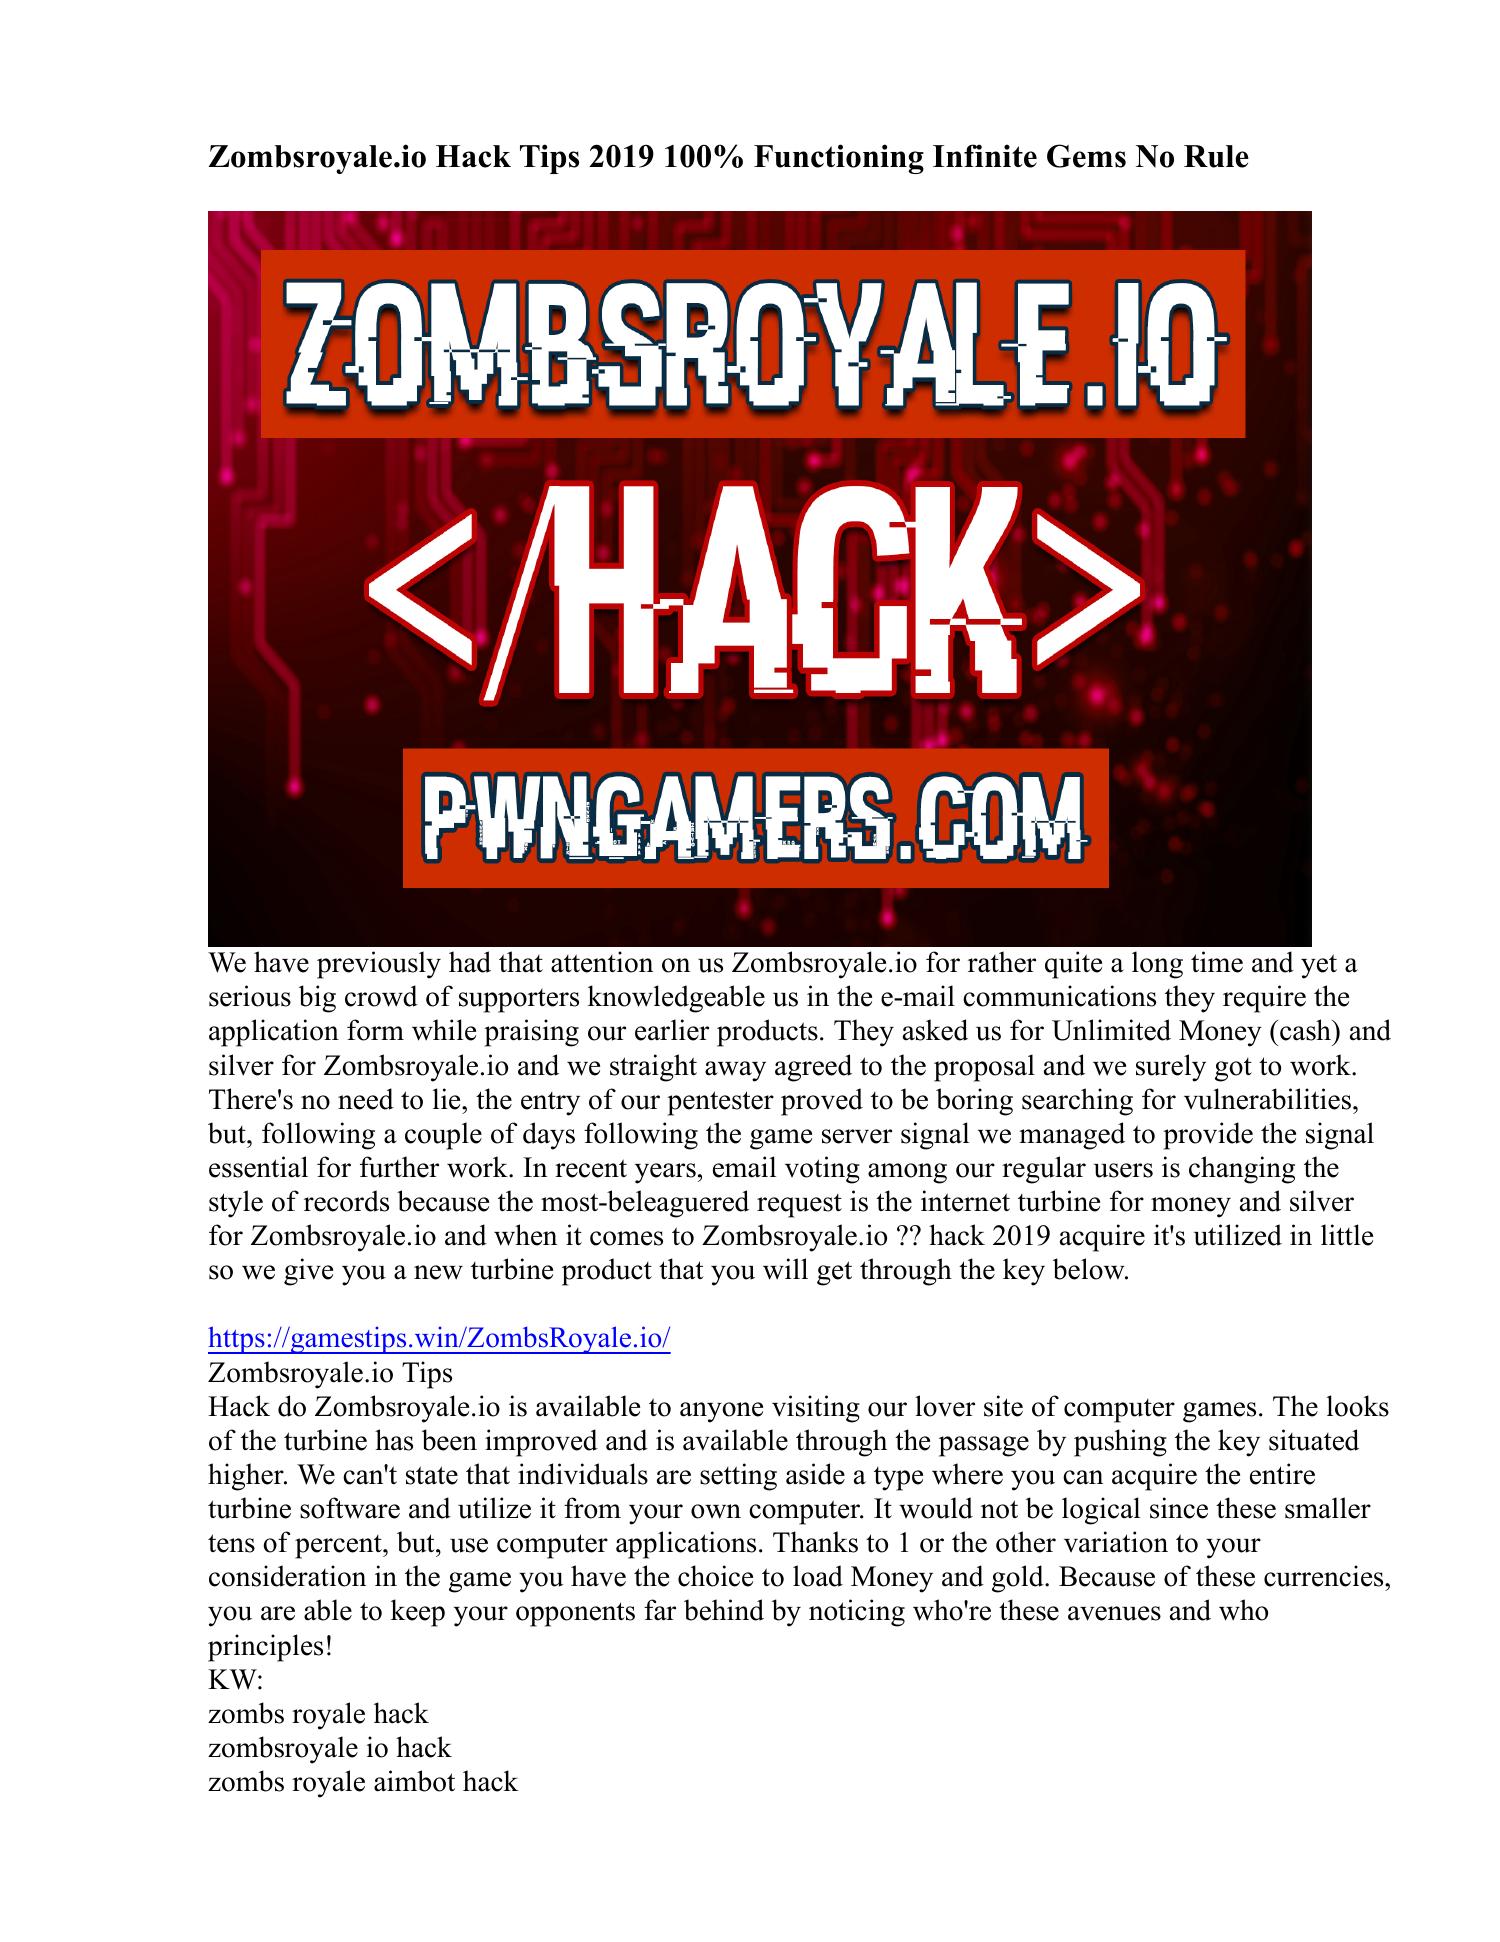 7 Zombsroyale.io hacks.pdf